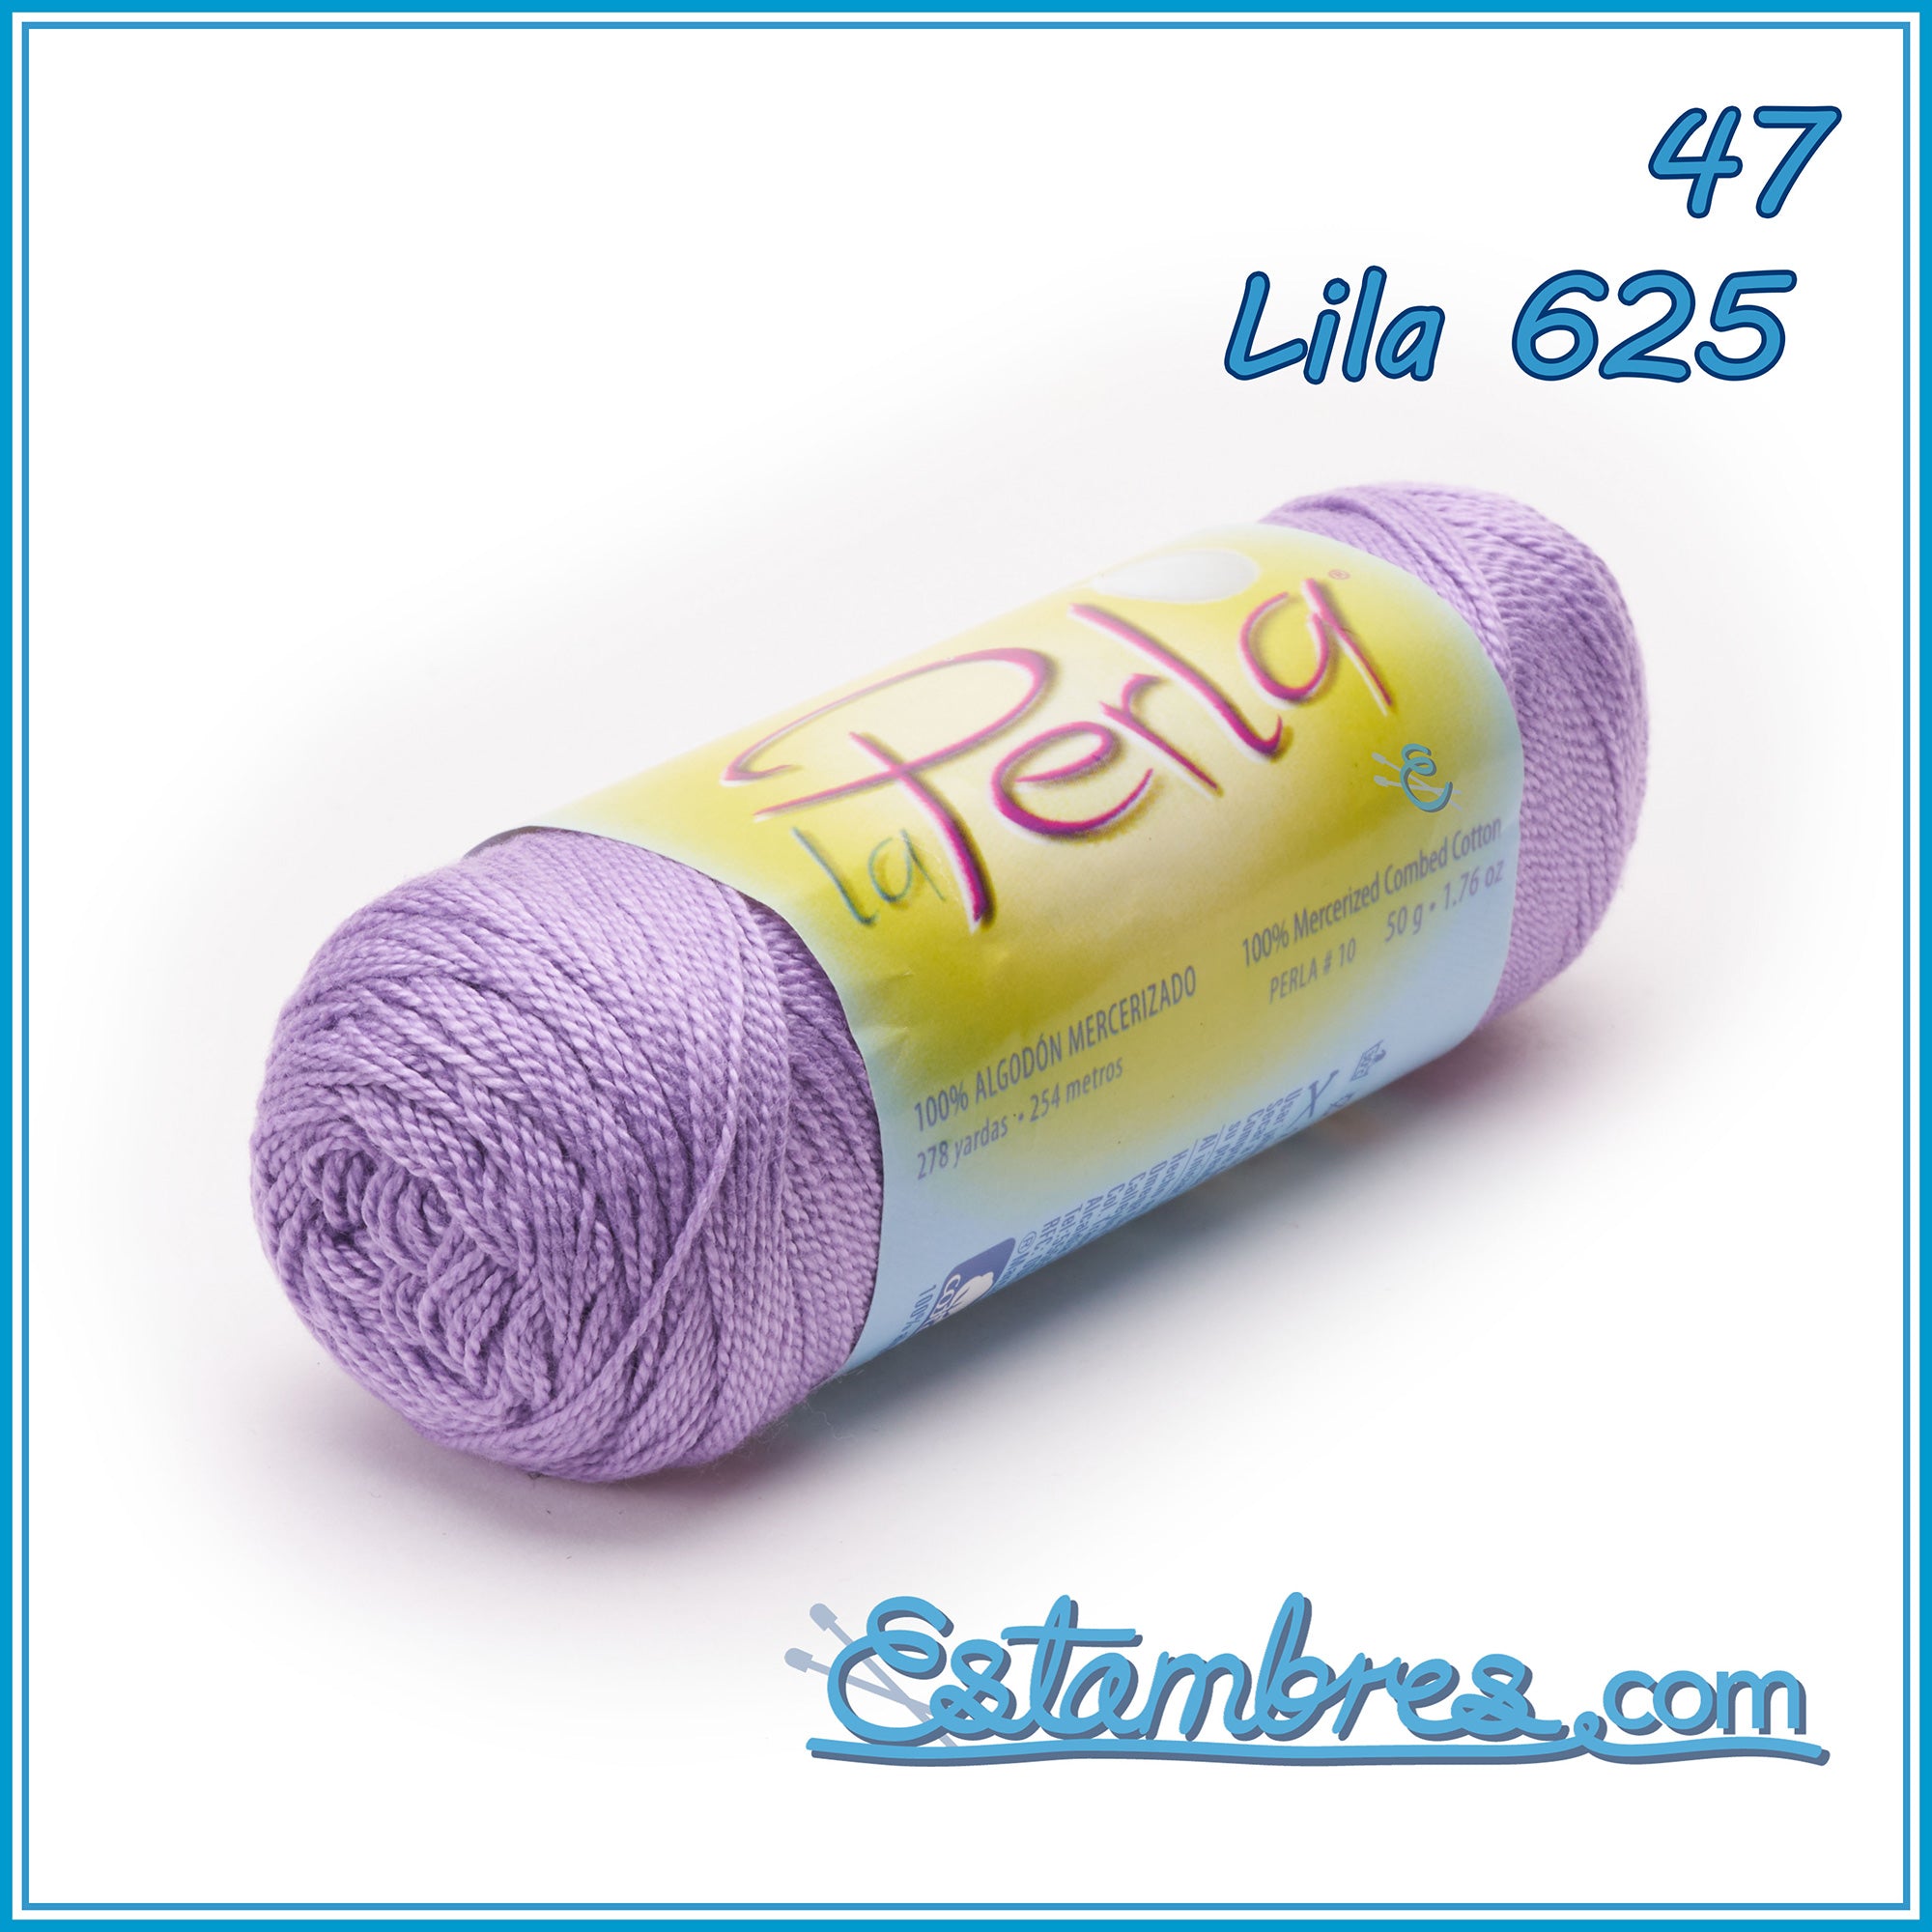 LA PERLA [50grs] by Omega - Perle Thread 100% Mercerized Cotton Thread  ideal for Fine Crocheting